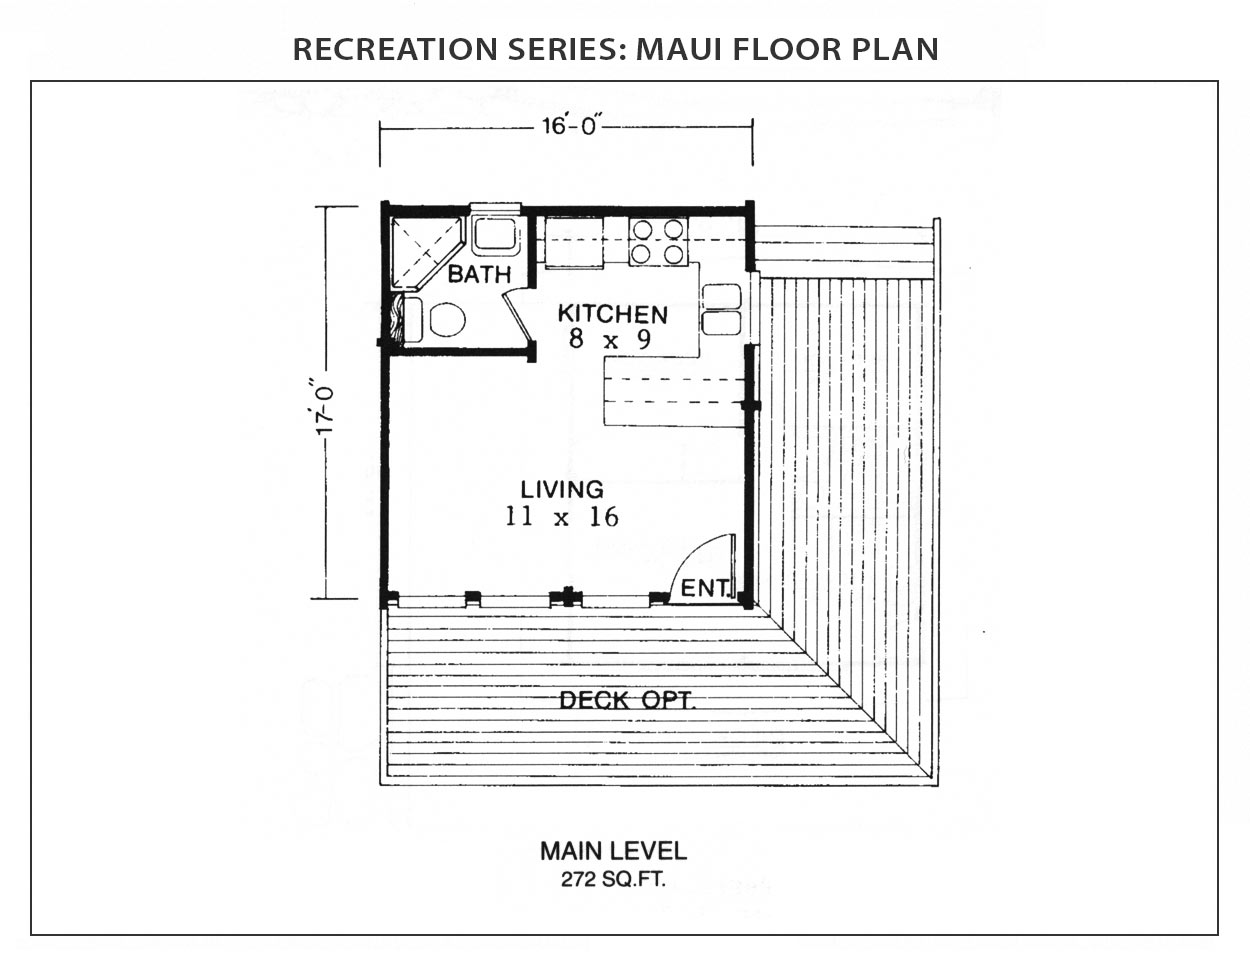 Maui Floor Plan Recreation Series IHC